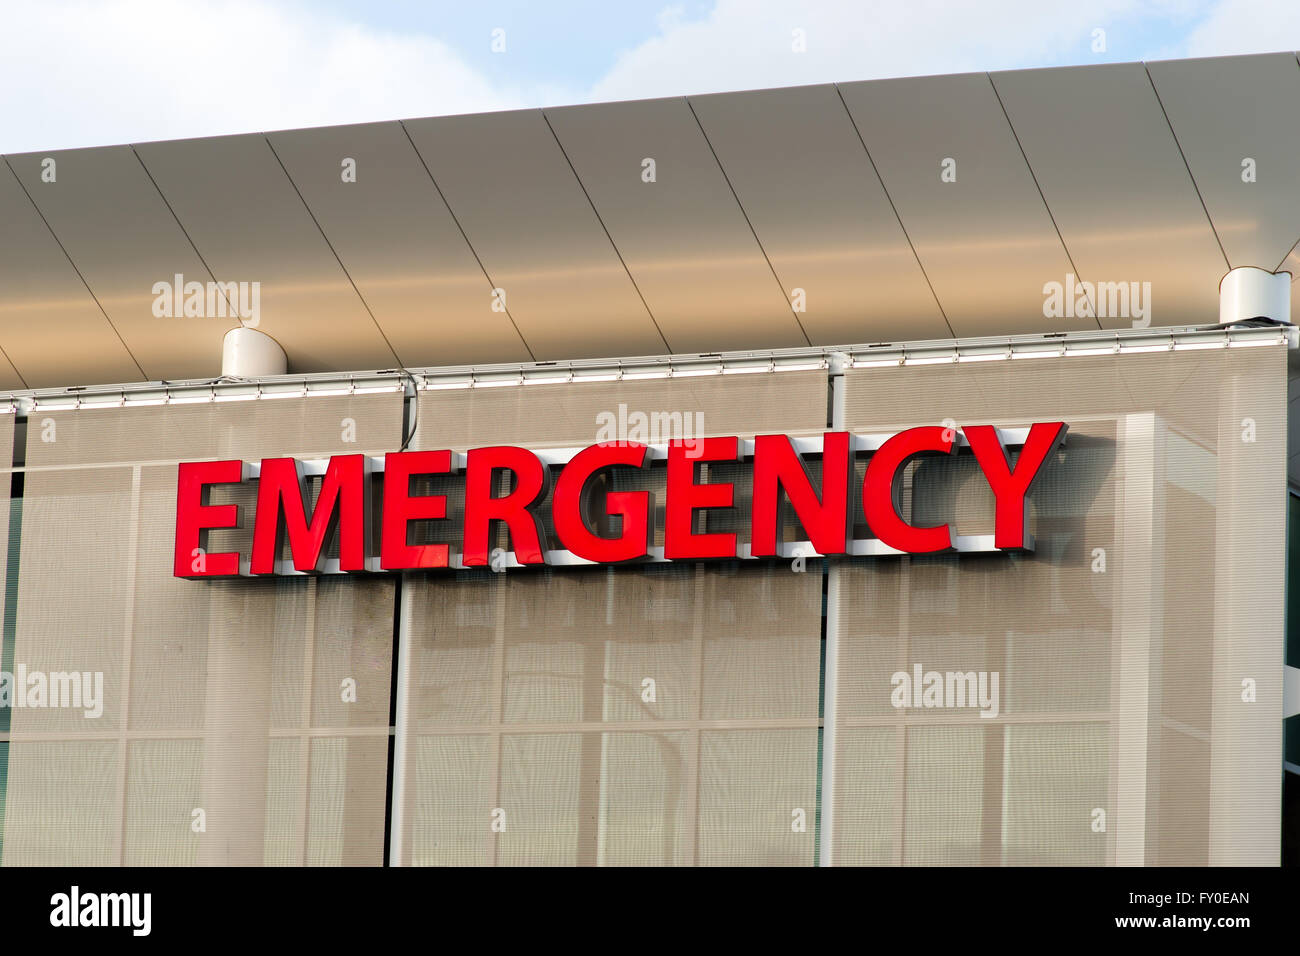 Emergency trauma center big red sign Stock Photo